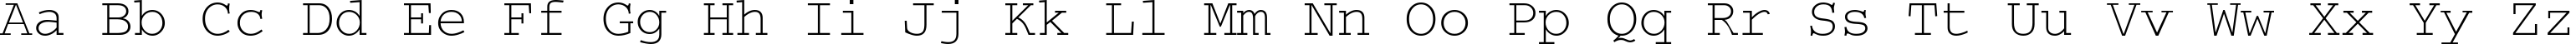 Пример написания английского алфавита шрифтом CourierTT